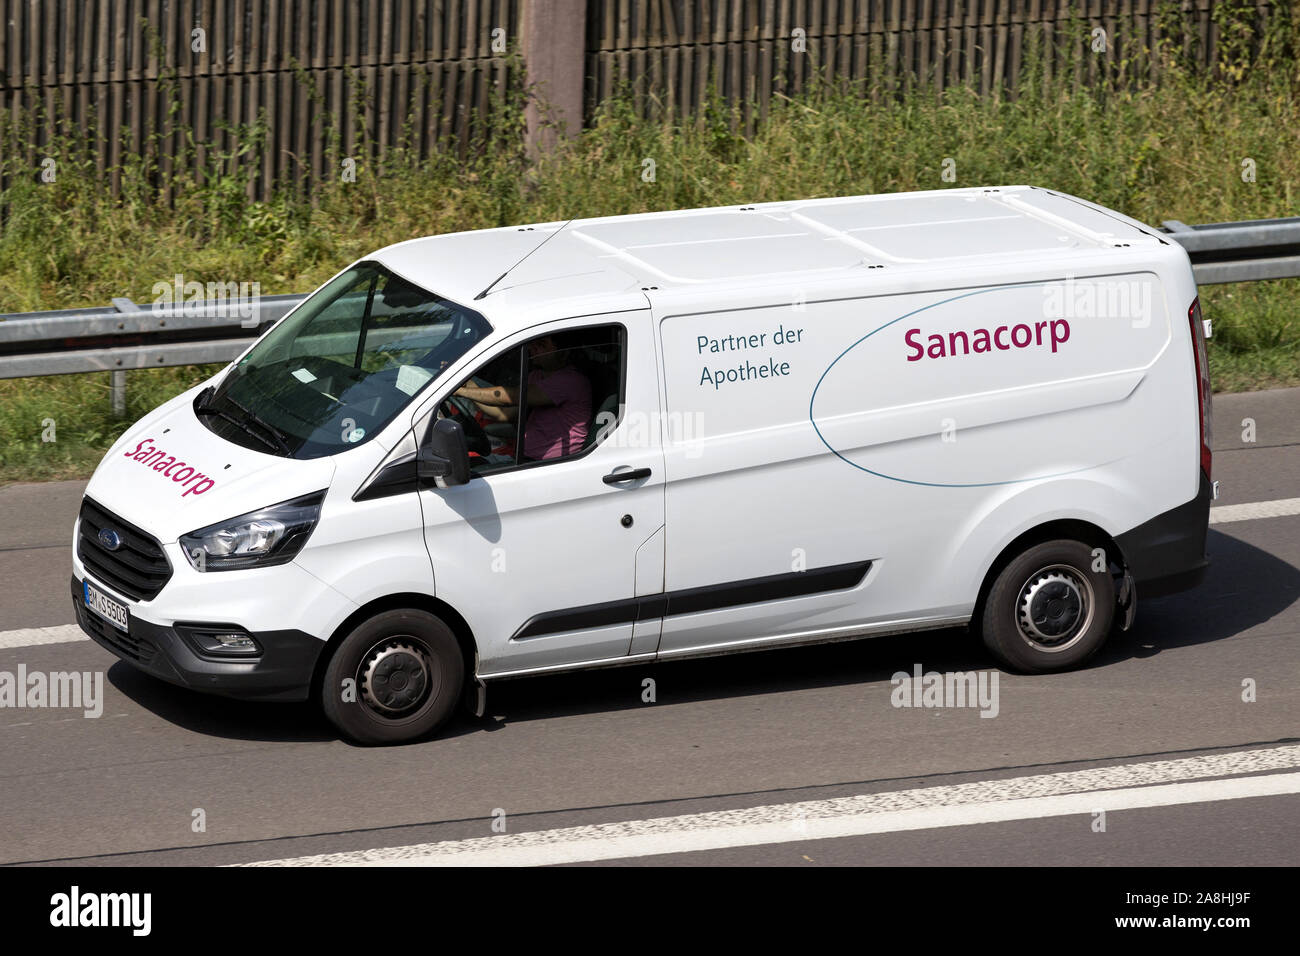 Sanacorp van on motorway. The Sanacorp pharmacist cooperative is one of the leading pharmaceutical wholesalers in Germany. Stock Photo